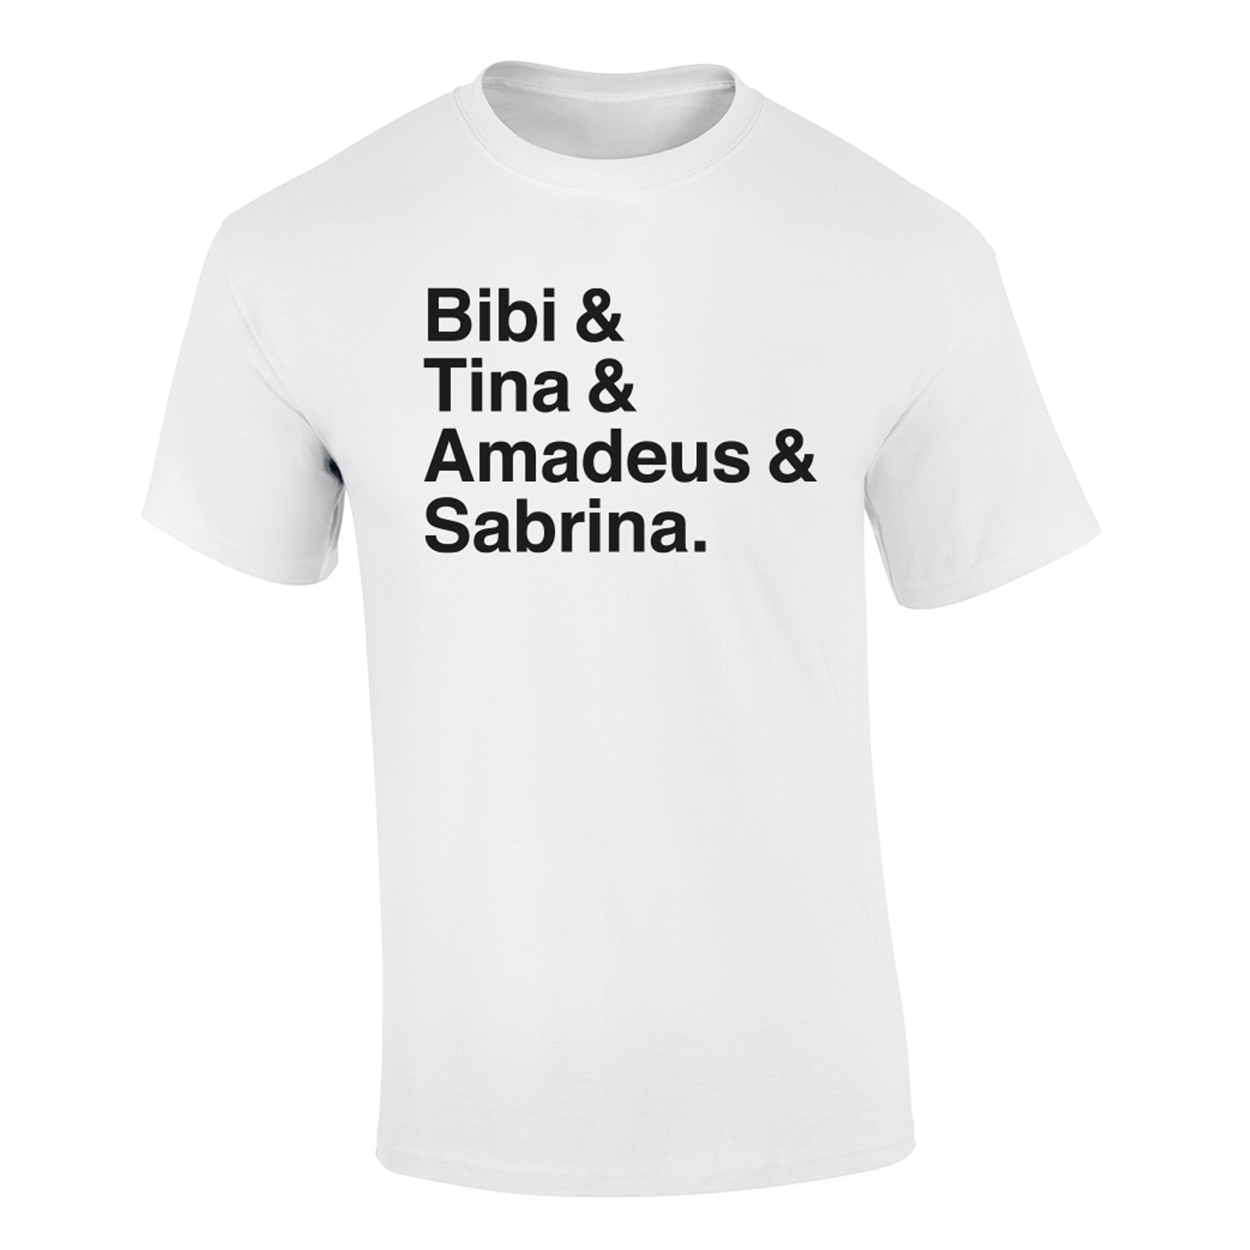 T-Shirt "Bibi&Tina" (Unisex) Shirt White